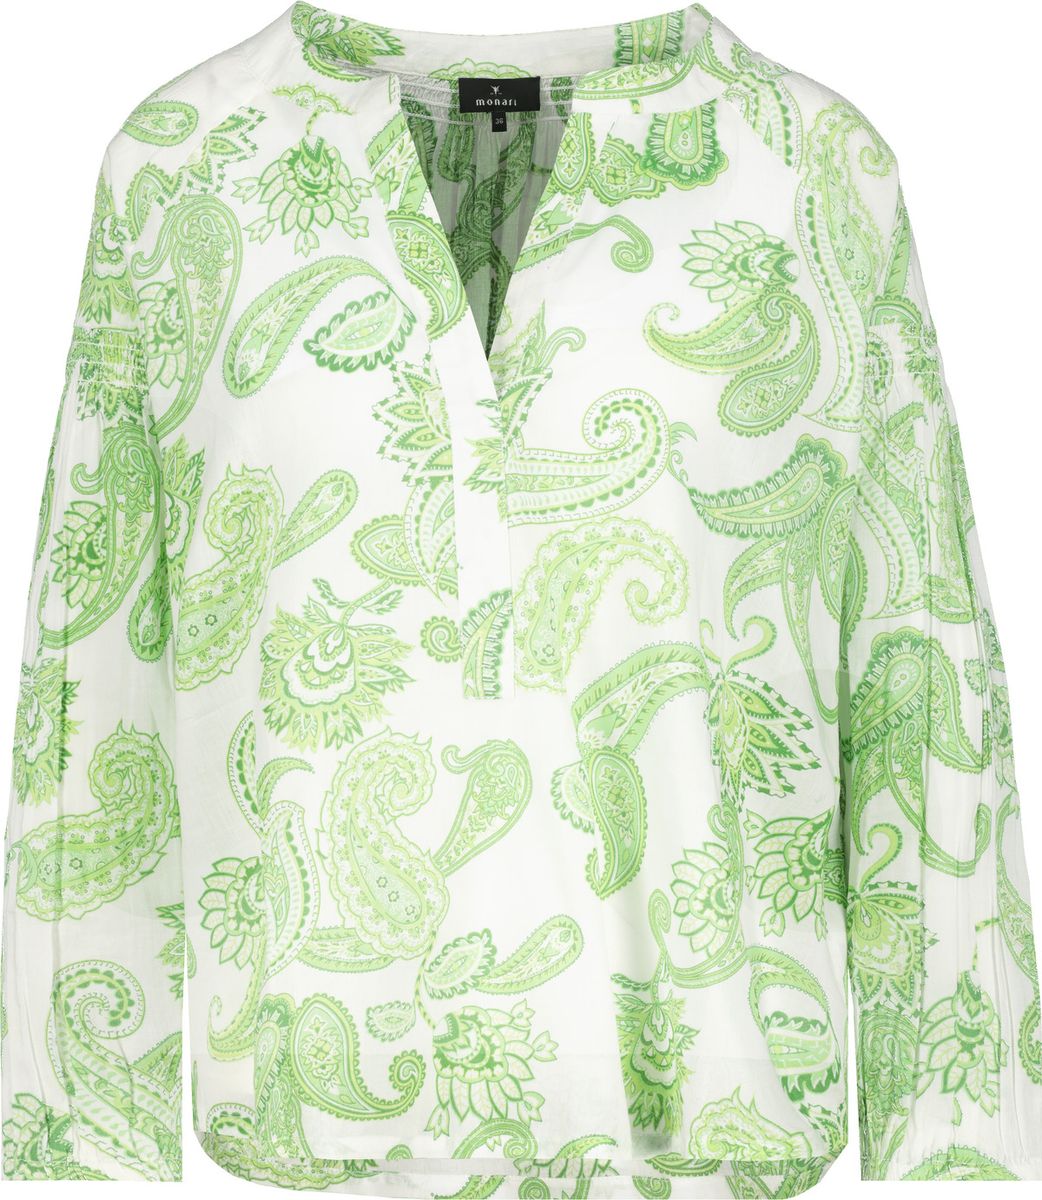 MONARI - Modehaus - green pastell Bluse, gemustert Onlineshop Fahr